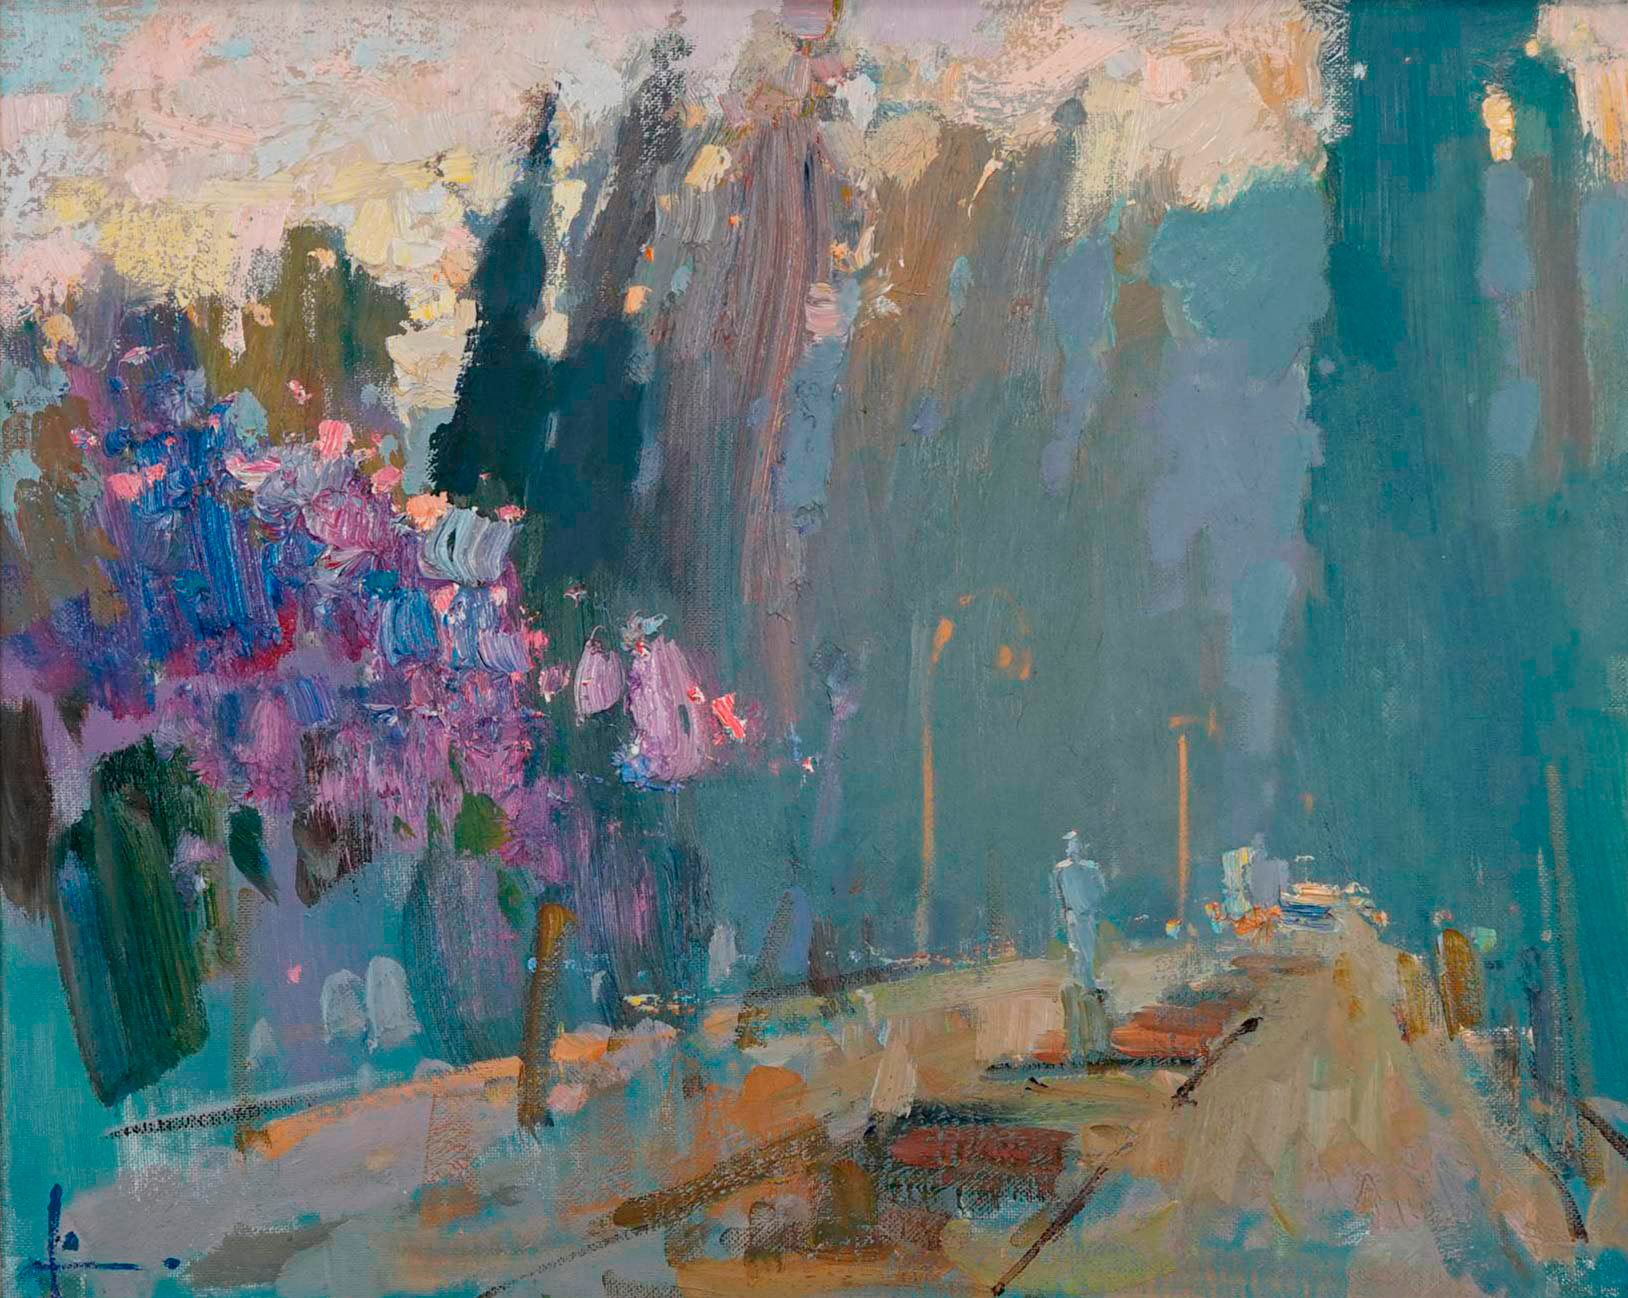 Alley in Simeiz - 1, Vyacheslav Korolenkov, Buy the painting Oil